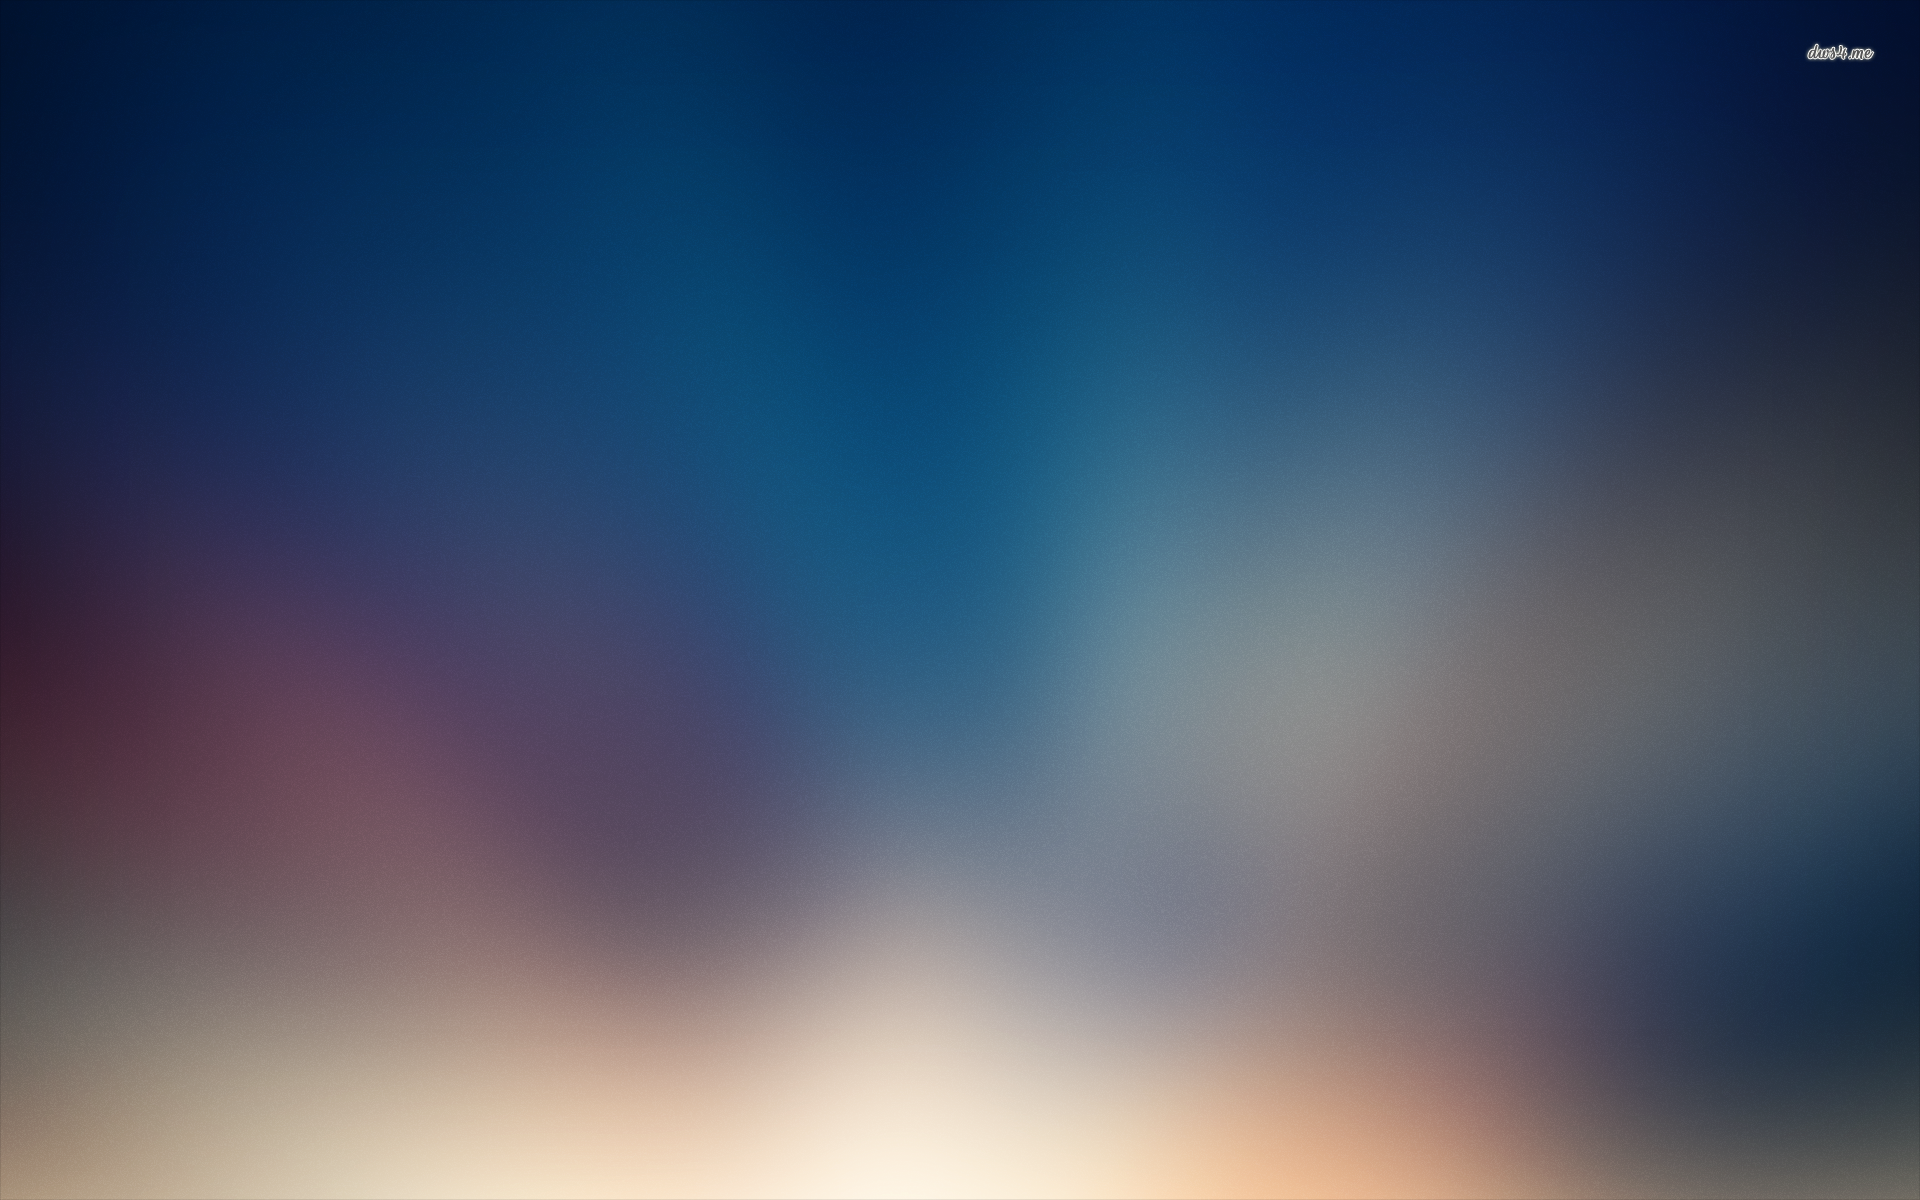 Abstract Blur Background Hd - 1920x1200 Wallpaper 